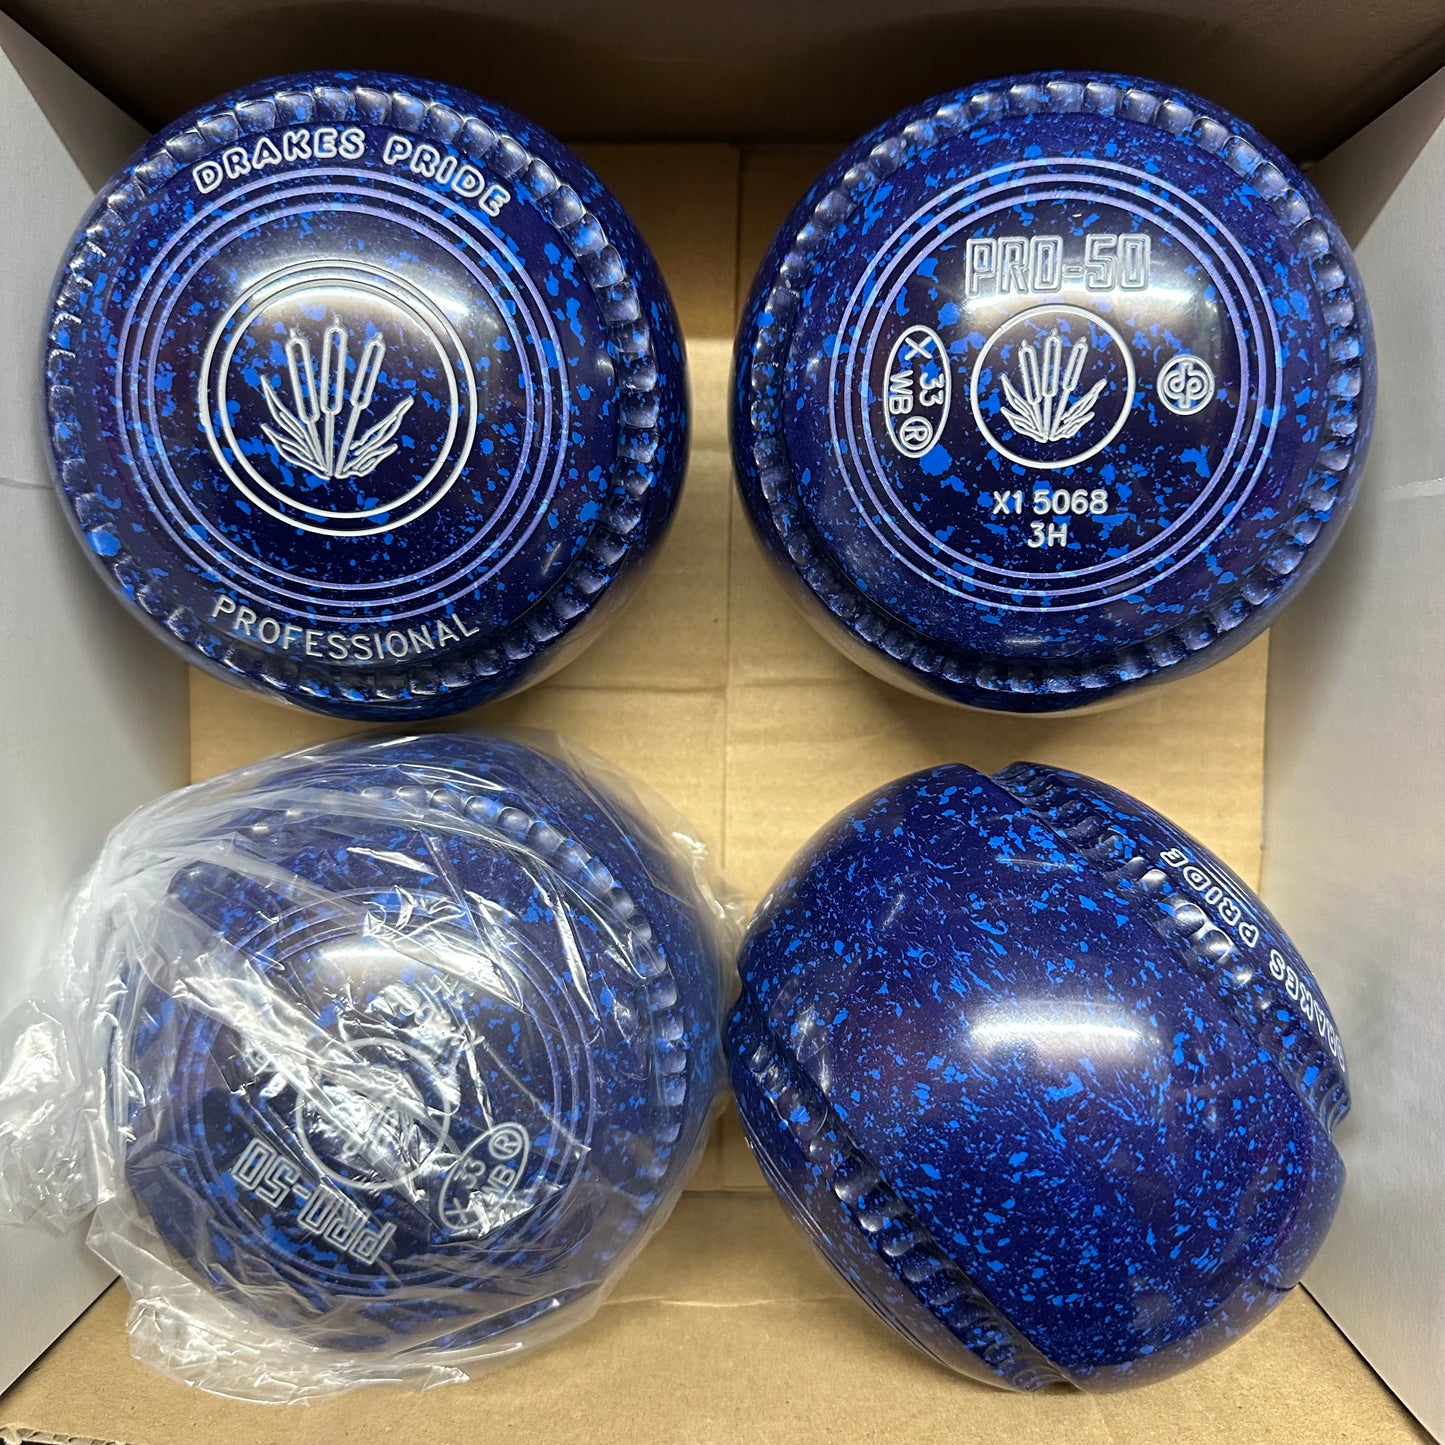 Drakes Pride PRO-50 - Size 3H - Dark Blue/Blue (Grey Rings) - WB33 Stamp